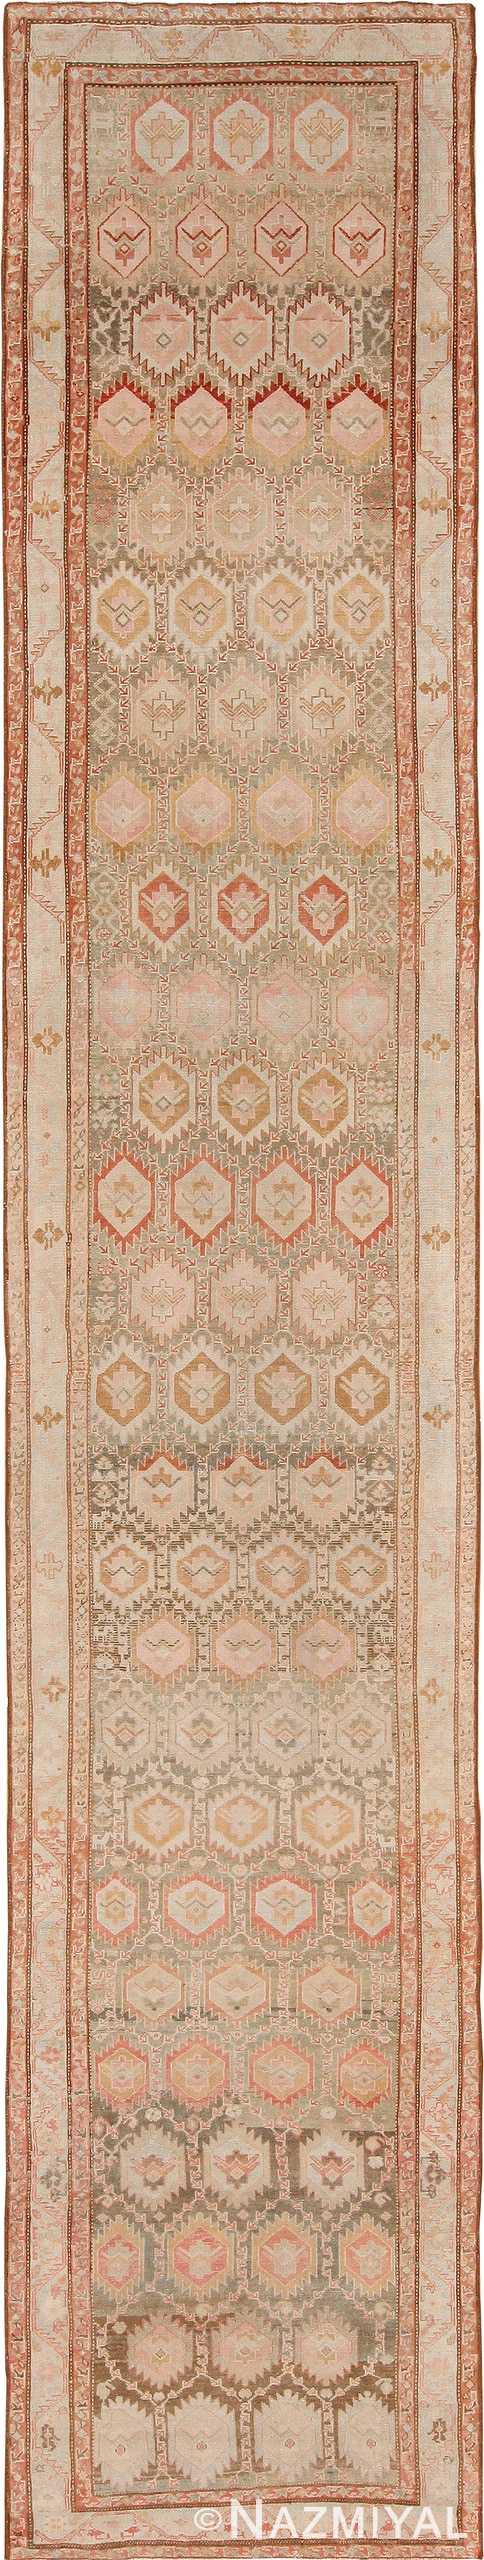 Antique East Turkestan Khotan Runner 71446 by Nazmiyal Antique Rugs